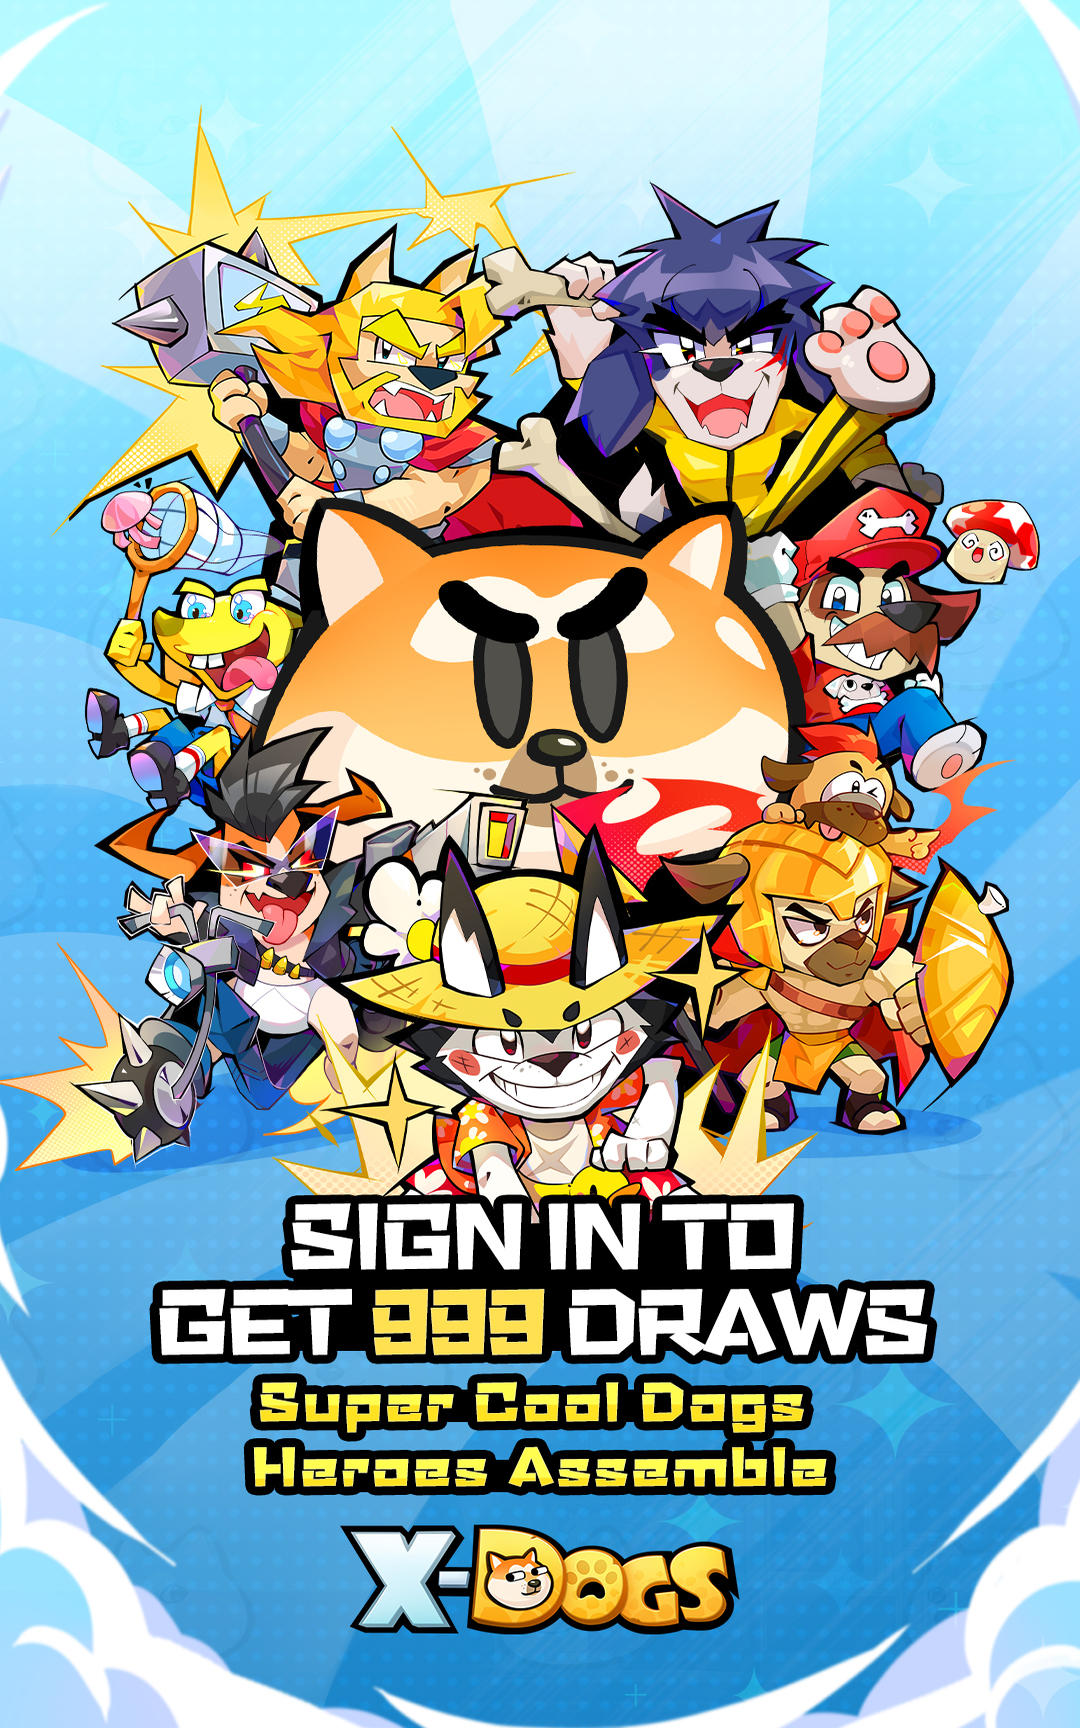 Screenshot of X Dogs: Get 999 Draws